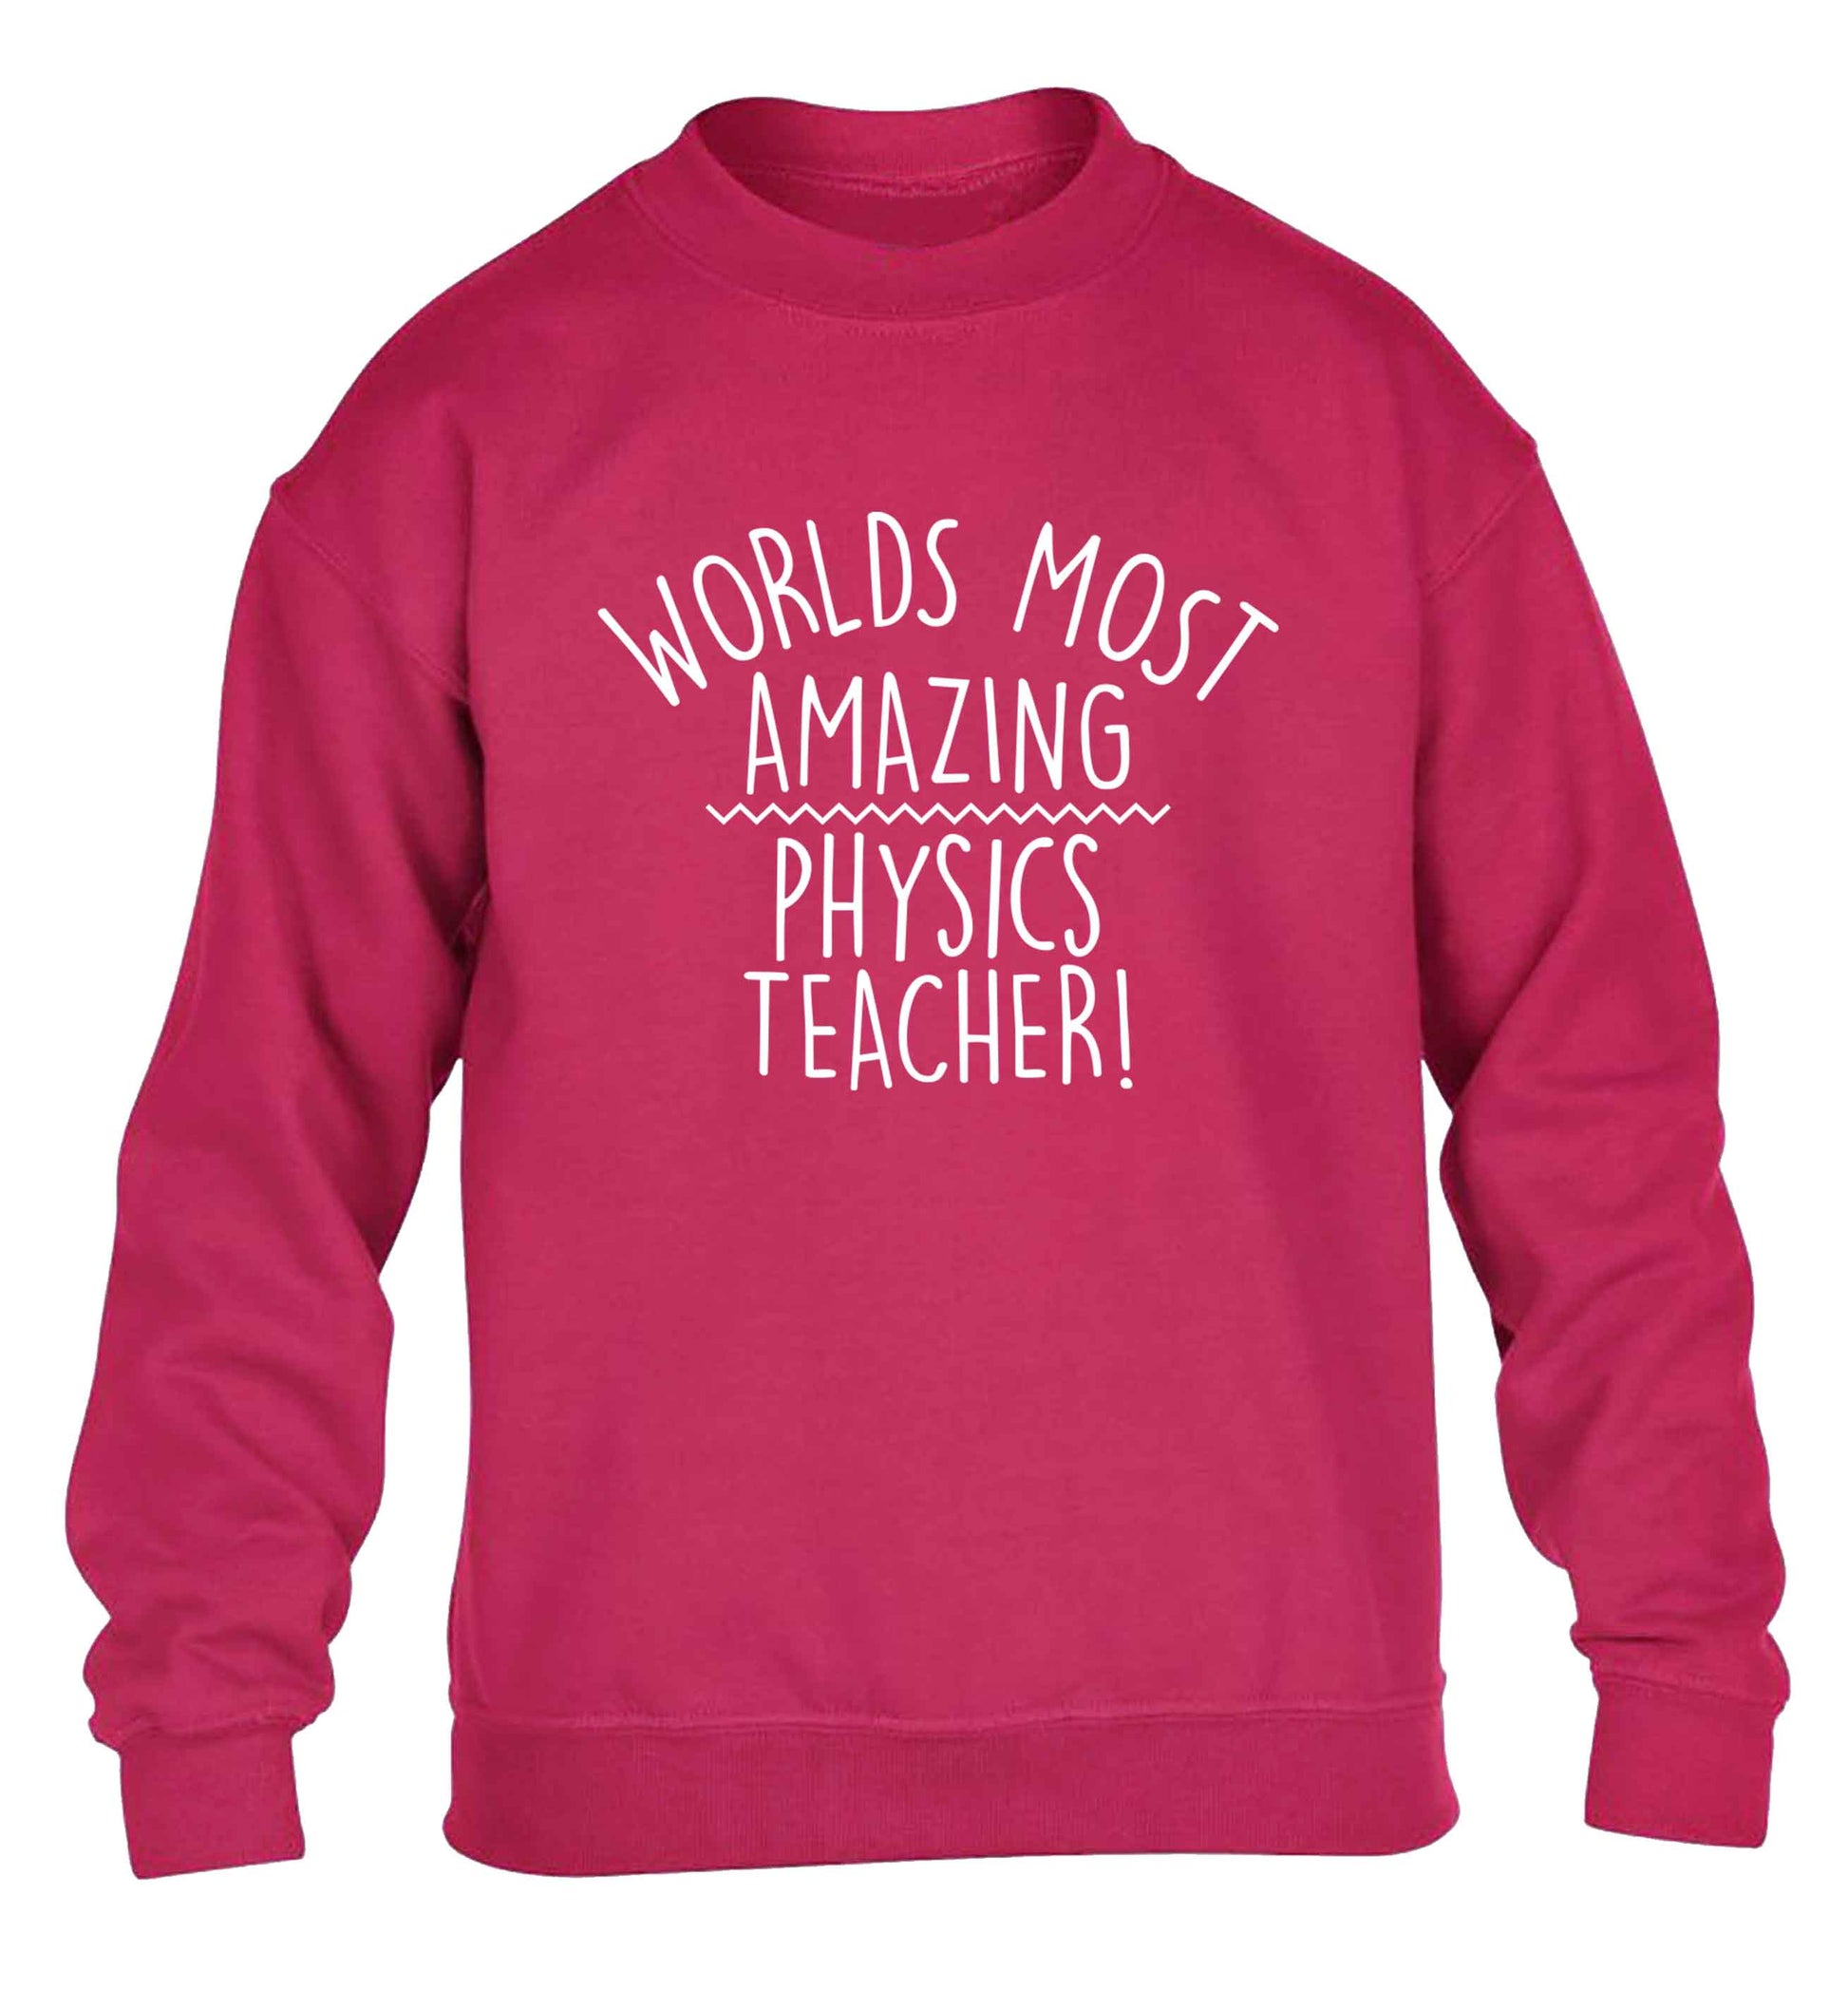 Worlds most amazing physics teacher children's pink sweater 12-13 Years